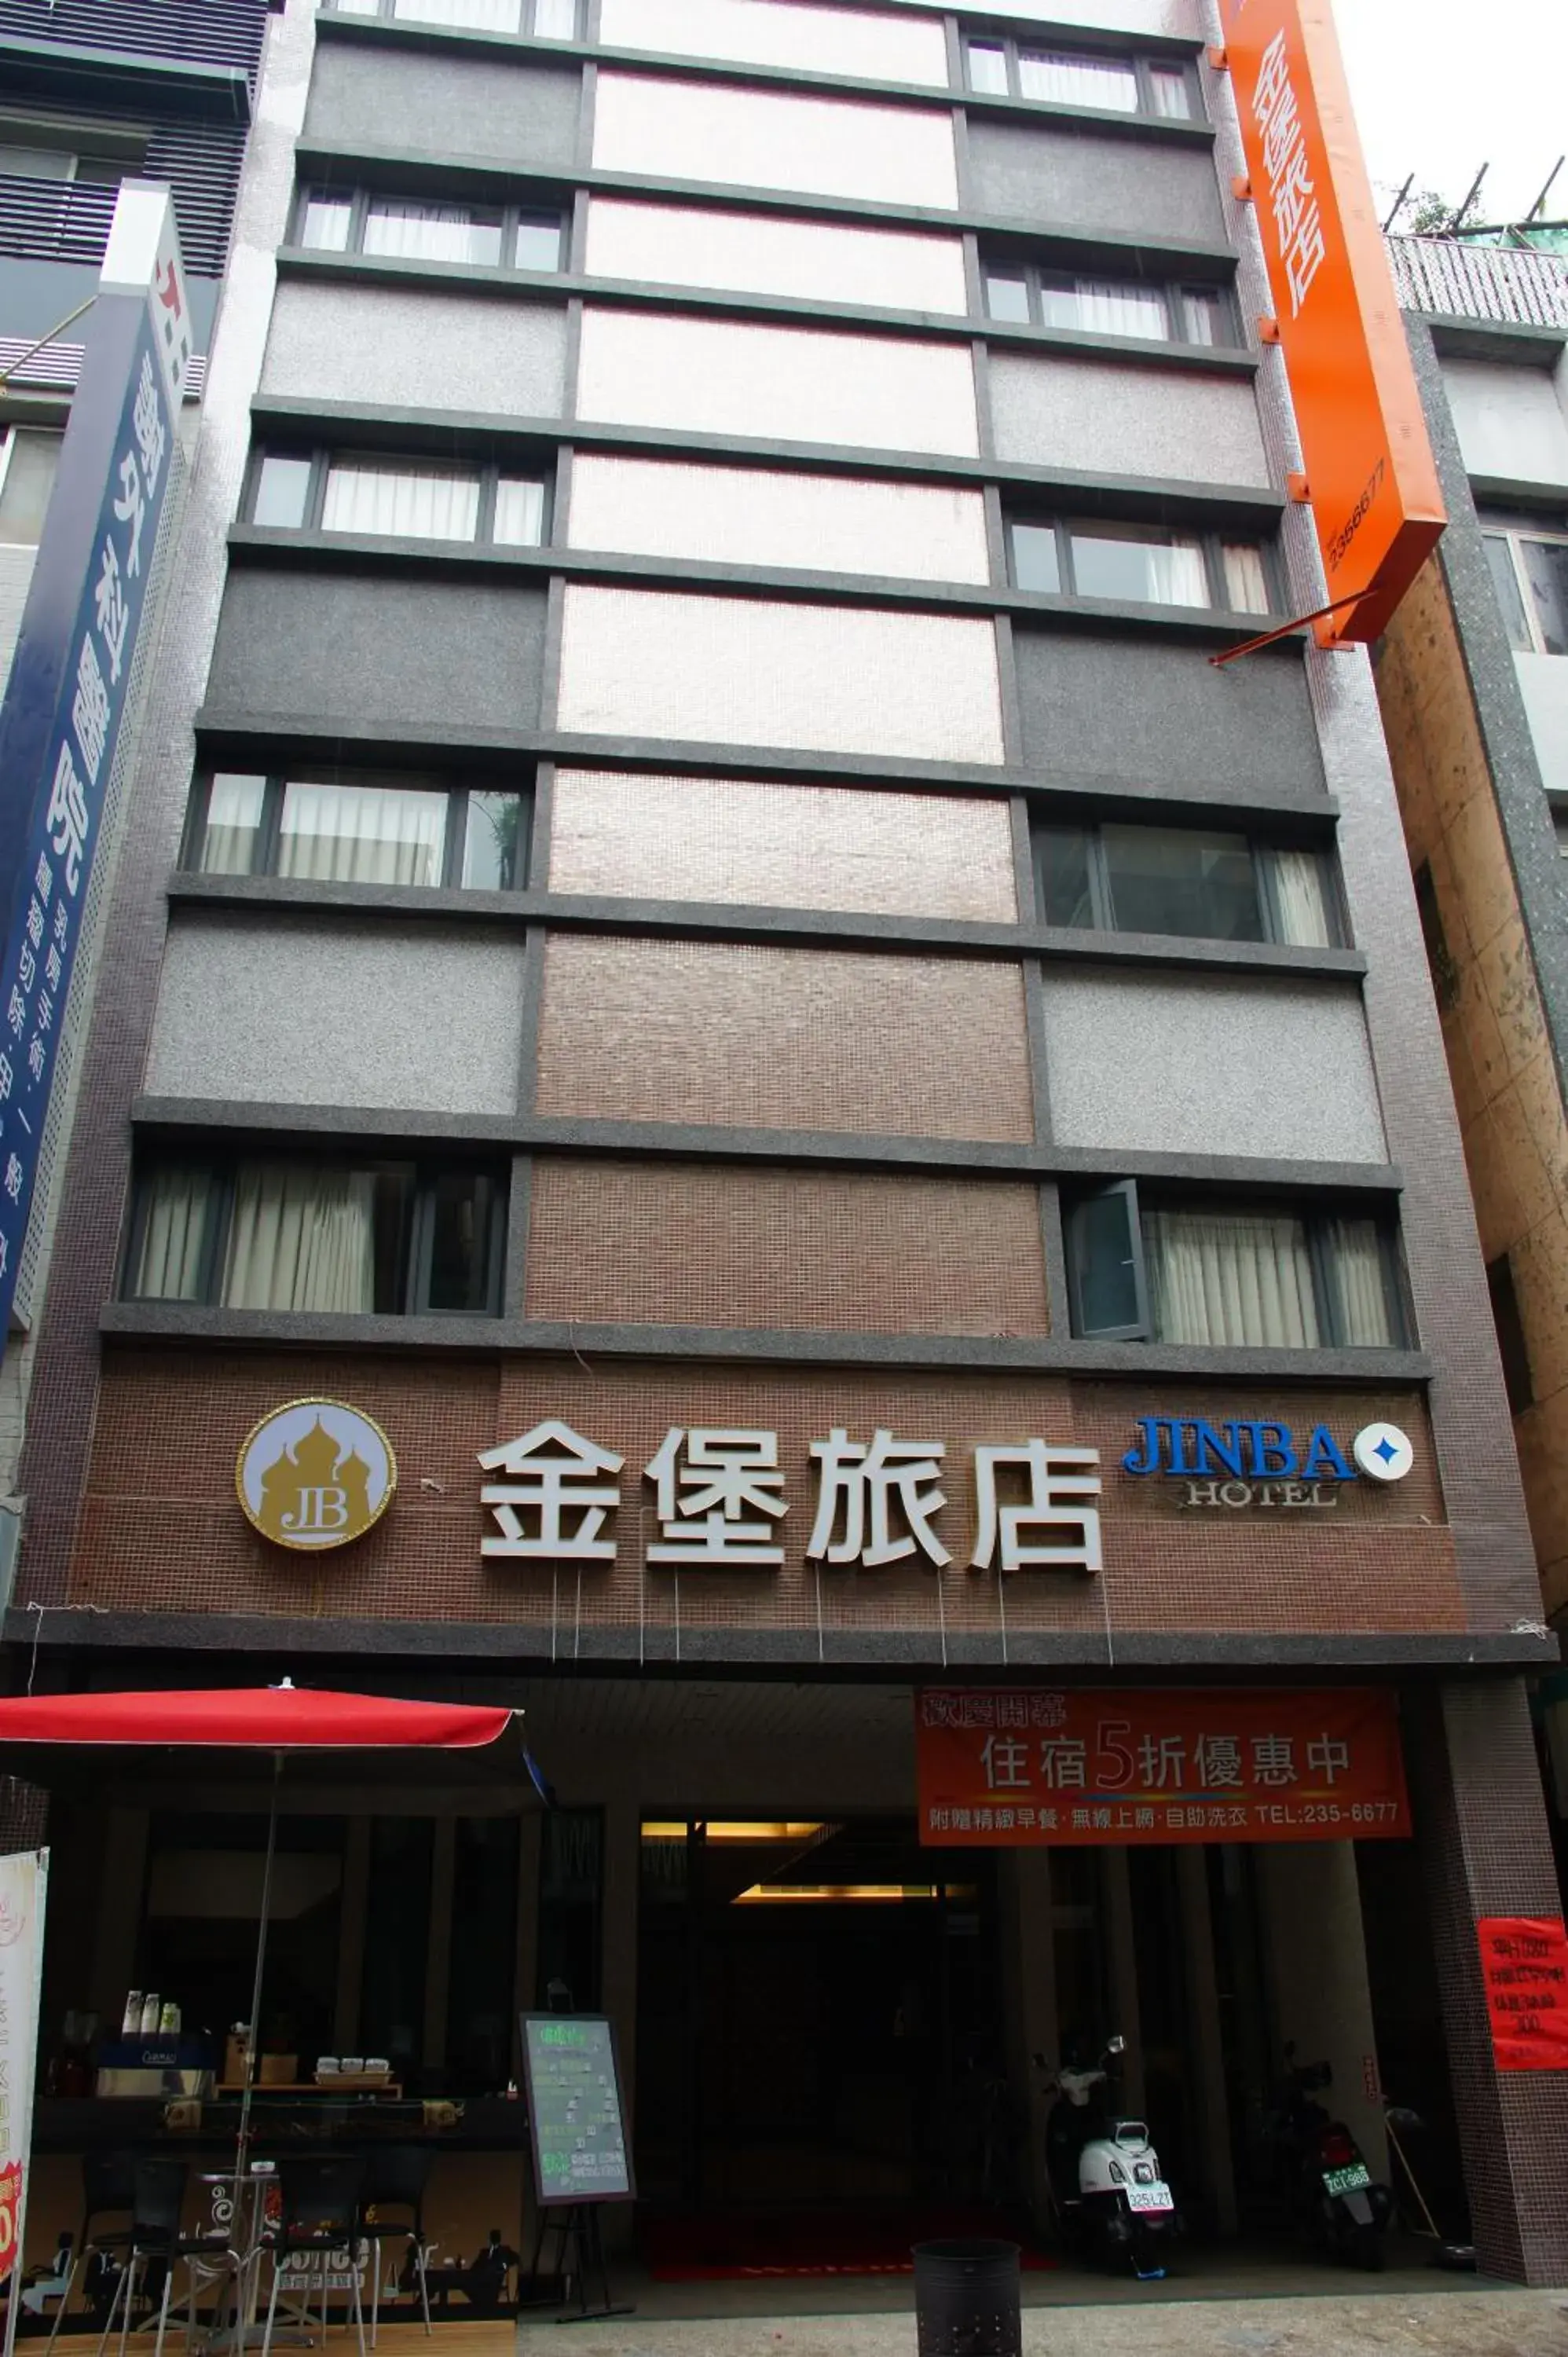 Property Building in Jin Bao Hotel